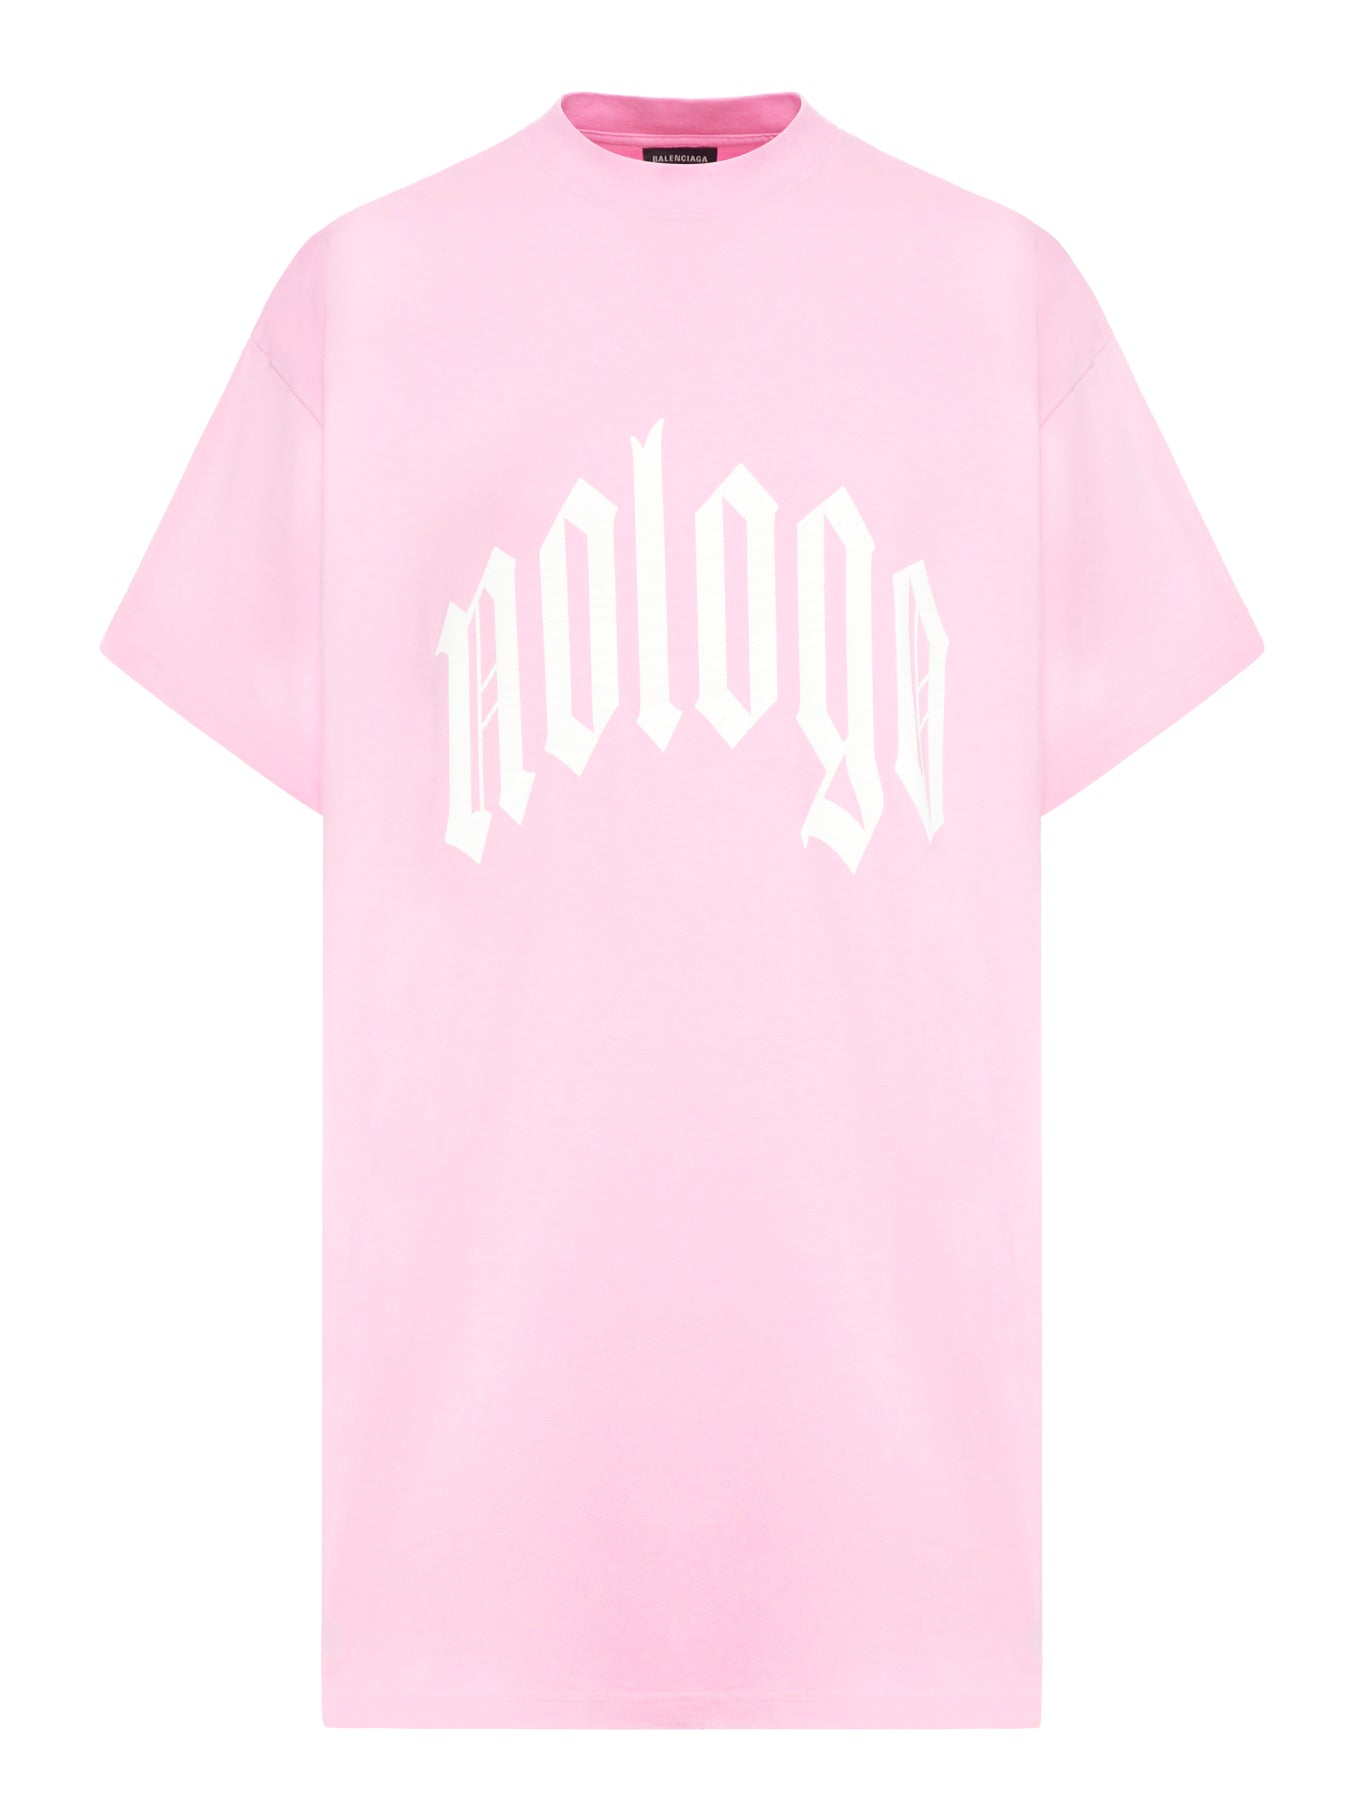 NO LOGO oversize t-shirt